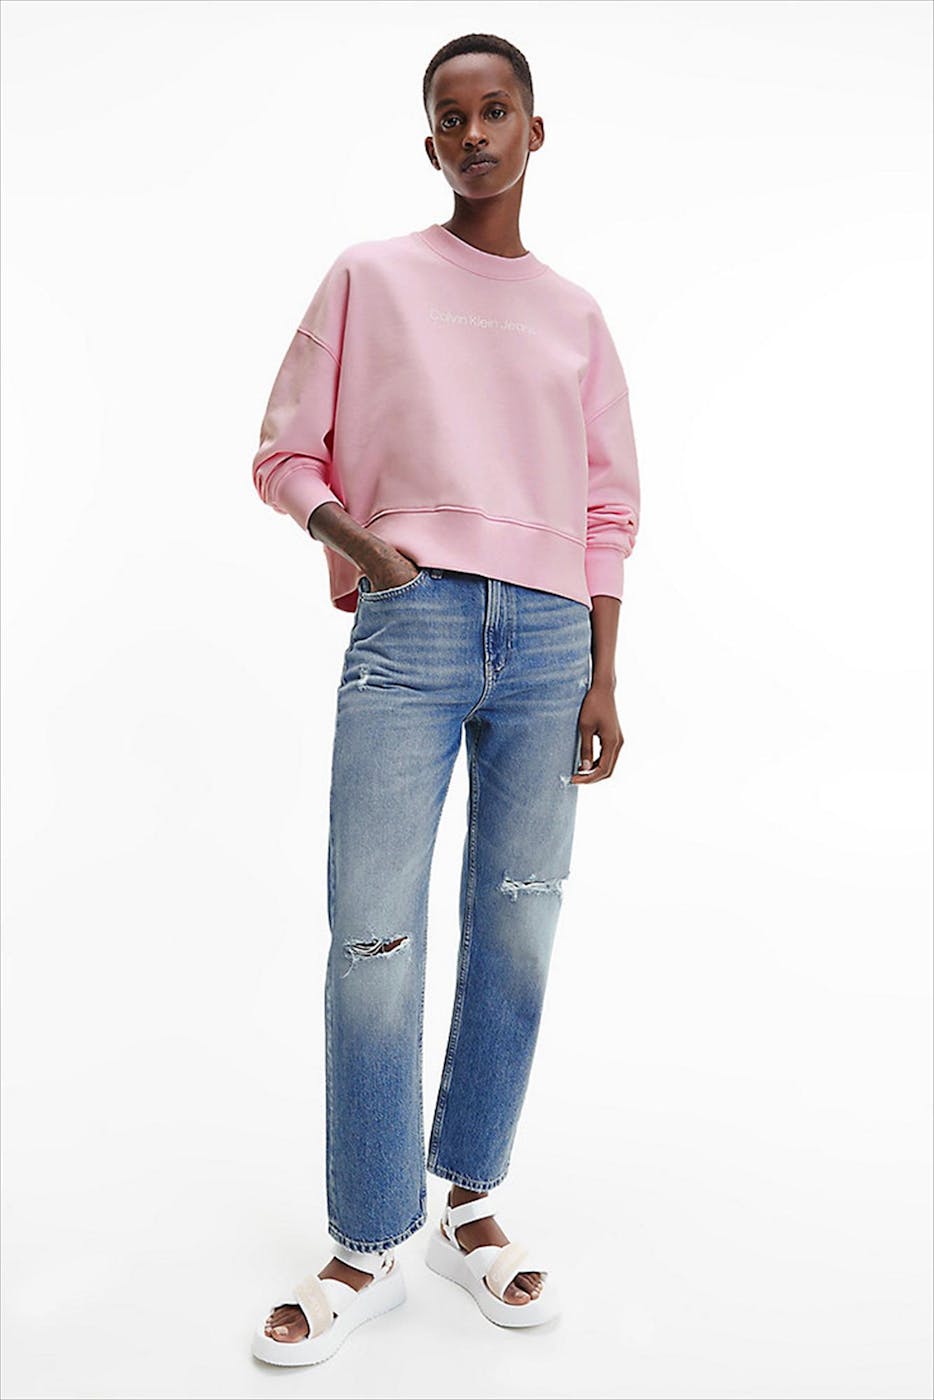 Calvin Klein Jeans - Roze Bella sweater